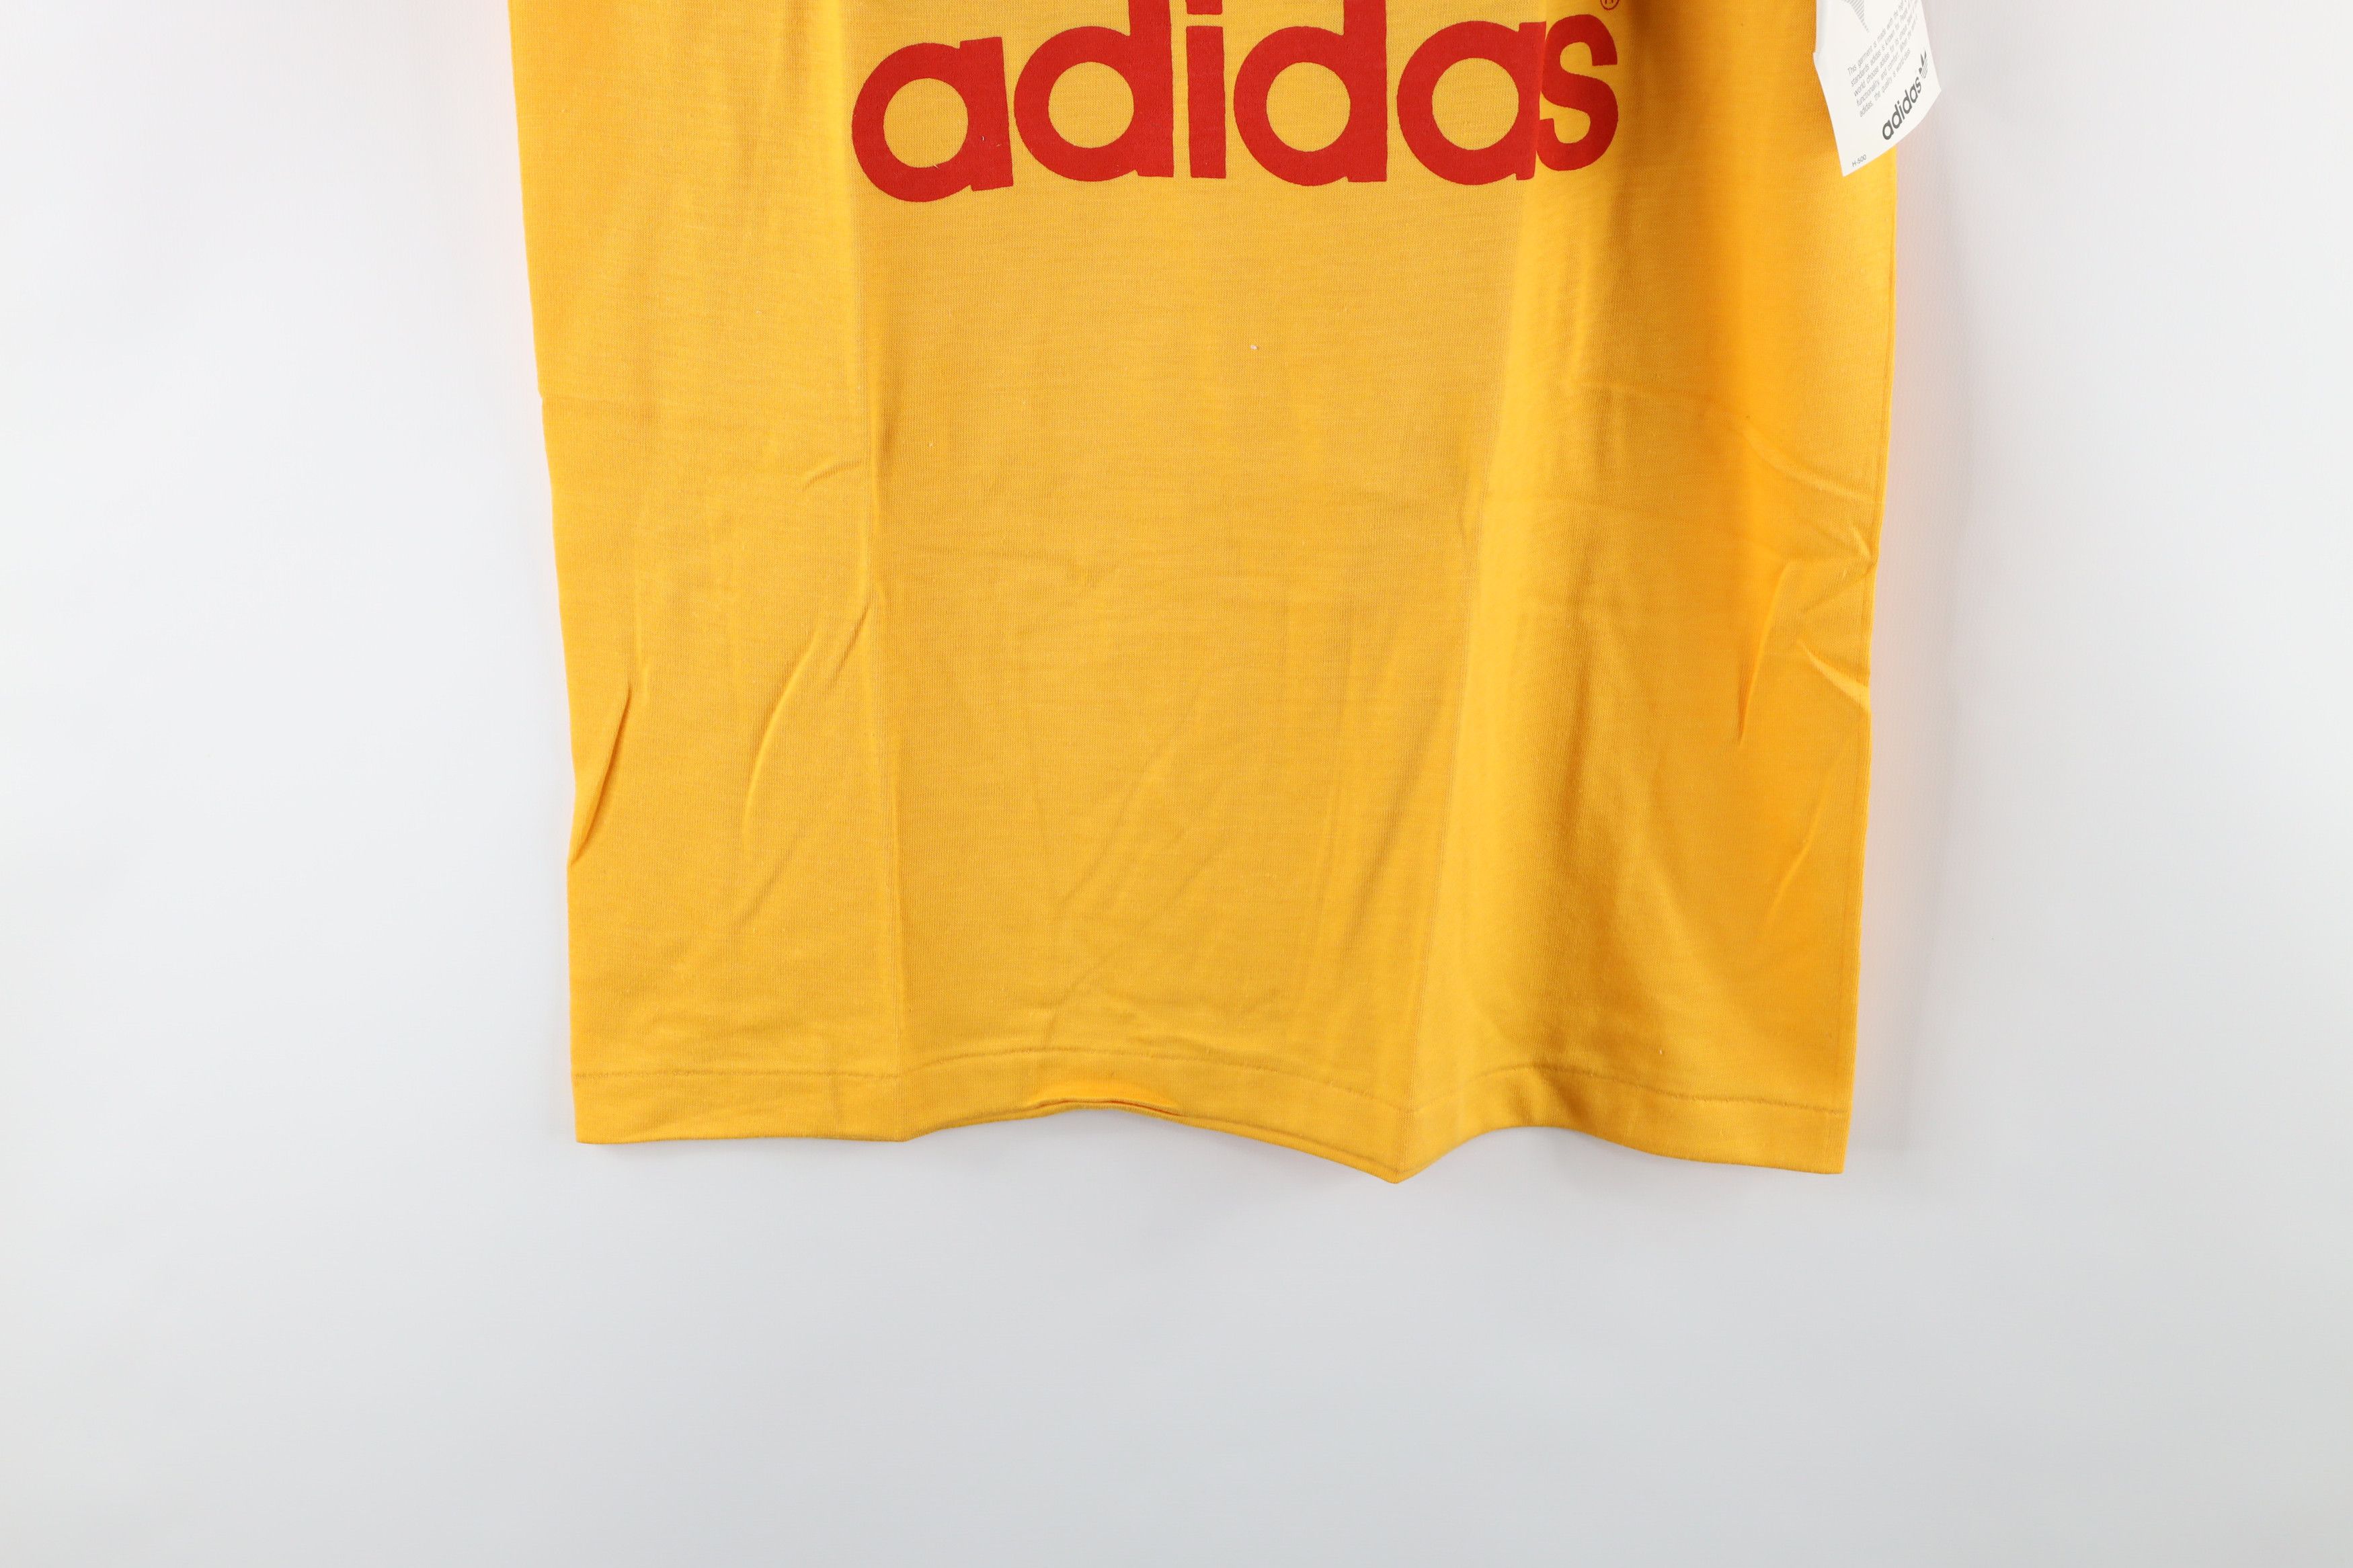 Adidas NOS Vintage 80s Adidas Trefoil 1988 Olympics T-Shirt Yellow Size US S / EU 44-46 / 1 - 3 Thumbnail